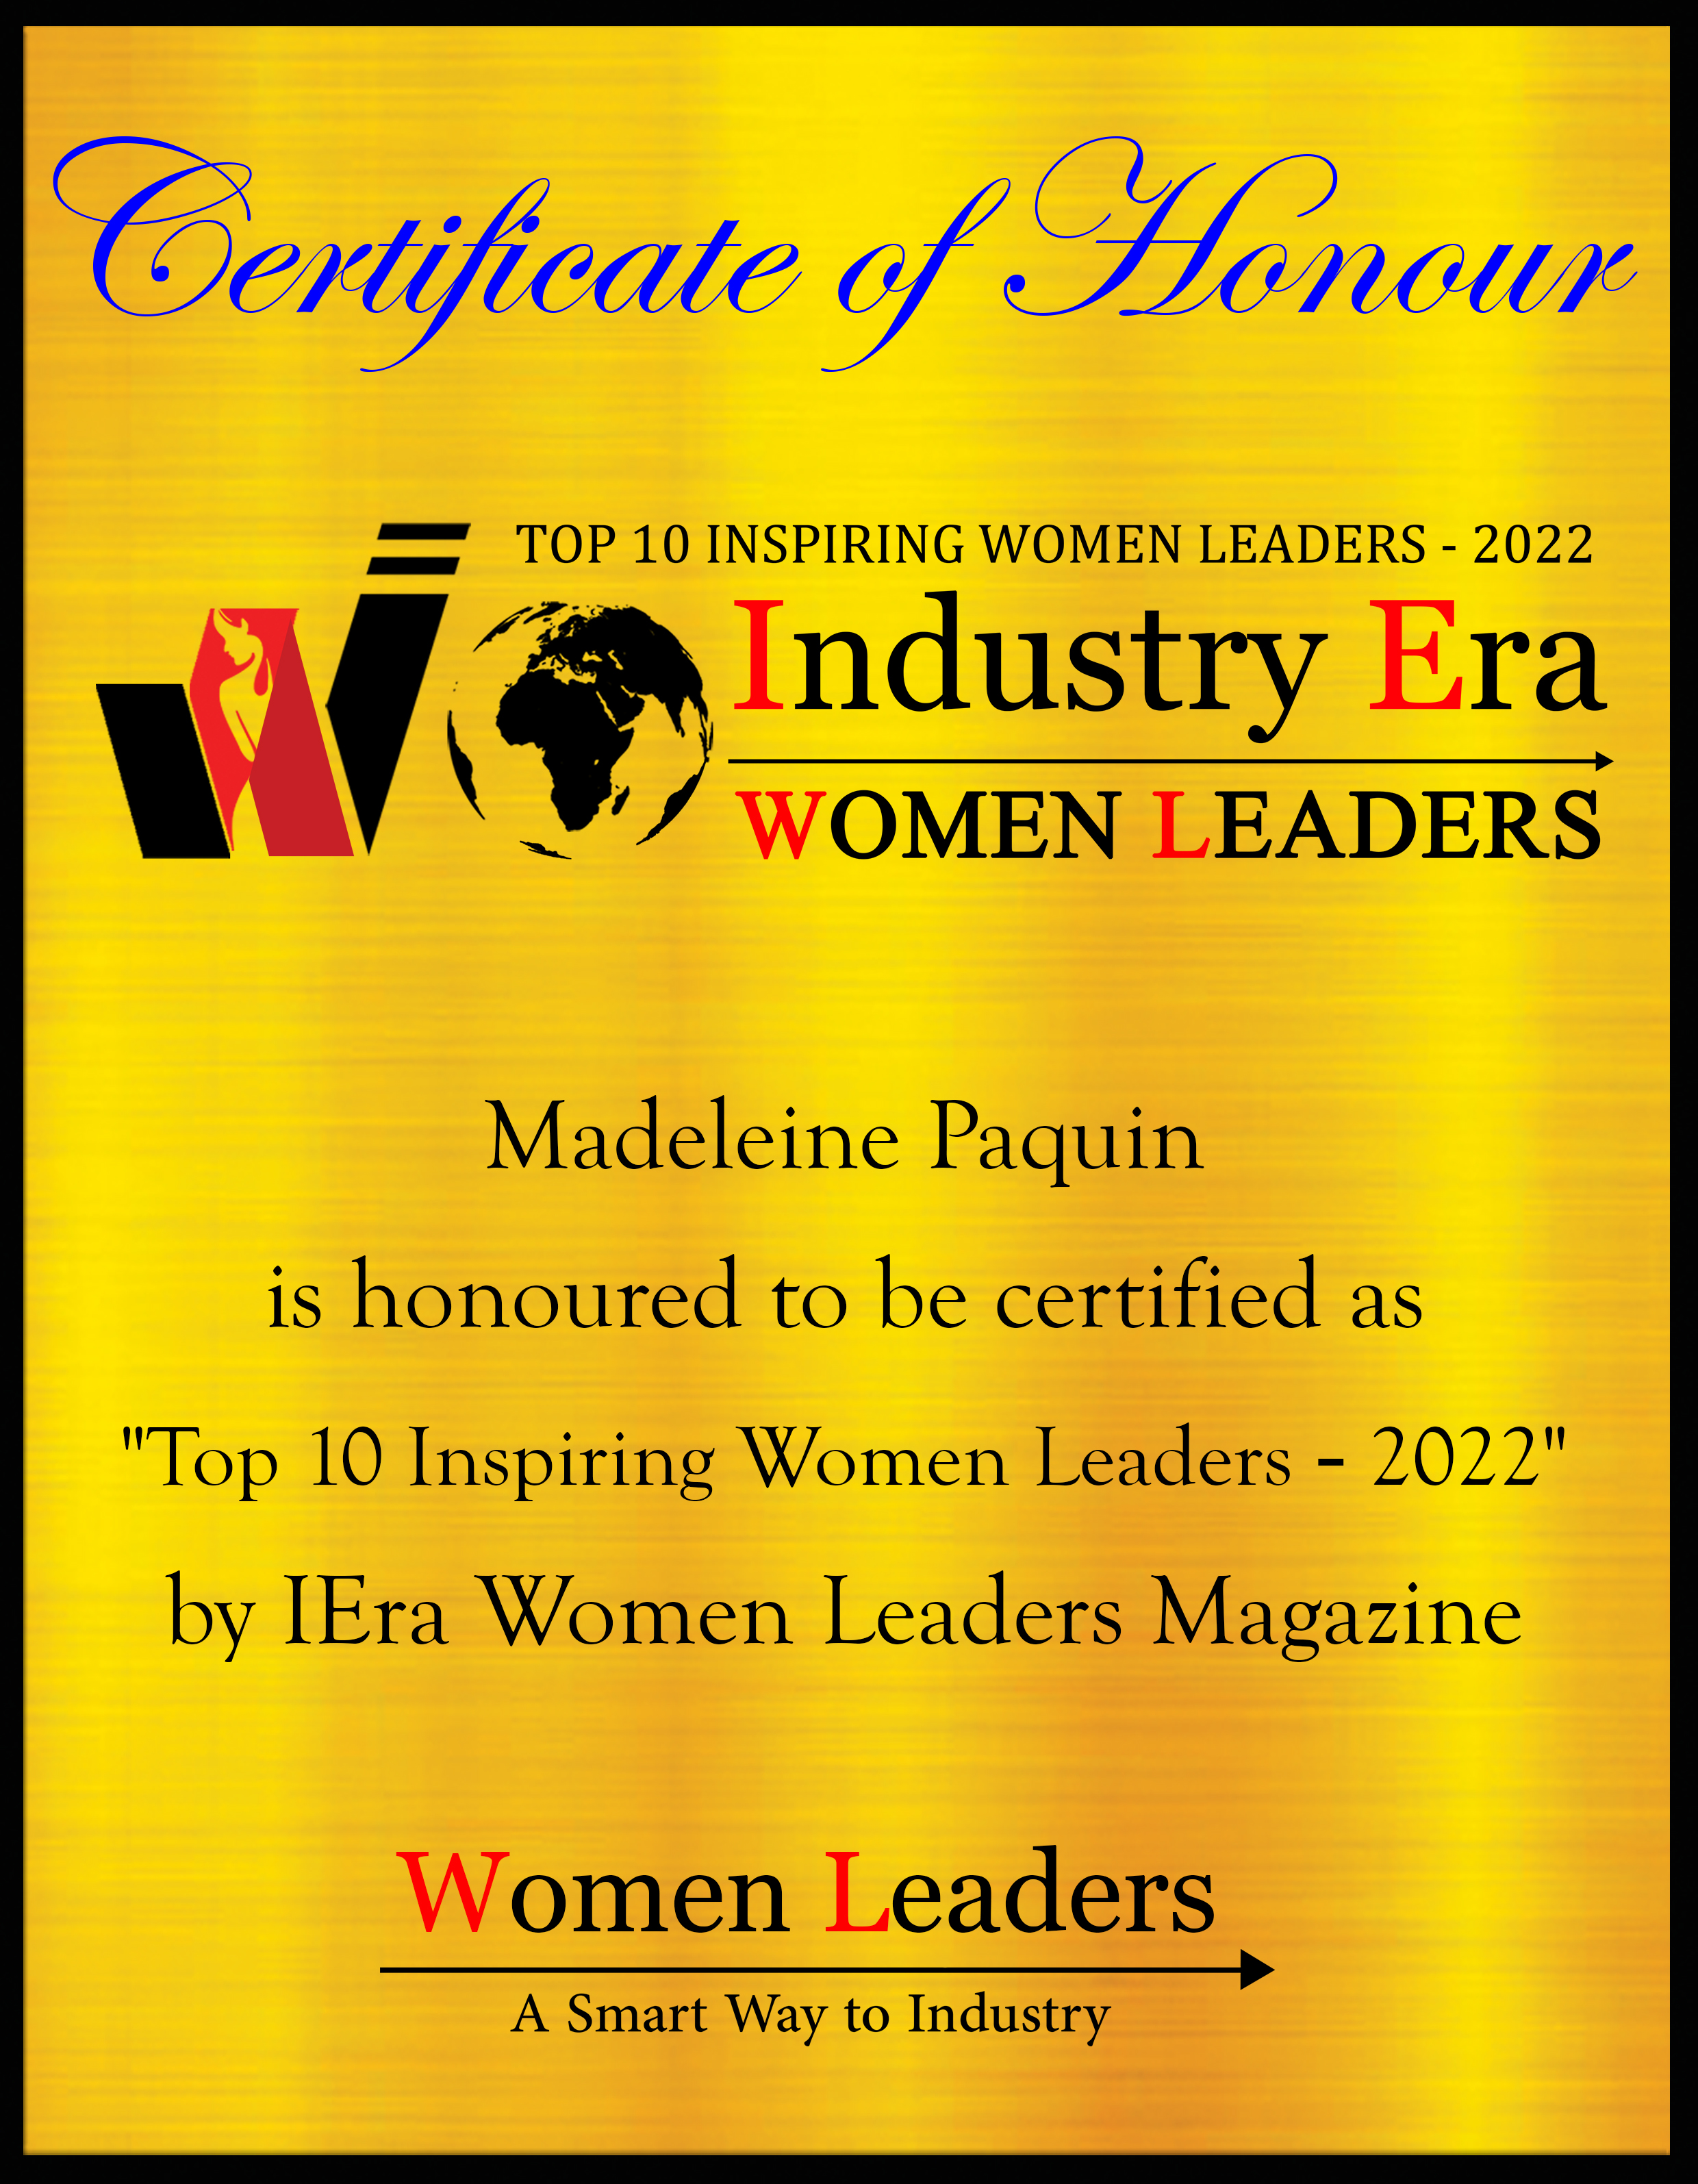 Masha Dinaburg, Associate Principal at MG Engineering D.P.C, Top 10 Inspiring Women Leaders of 2022